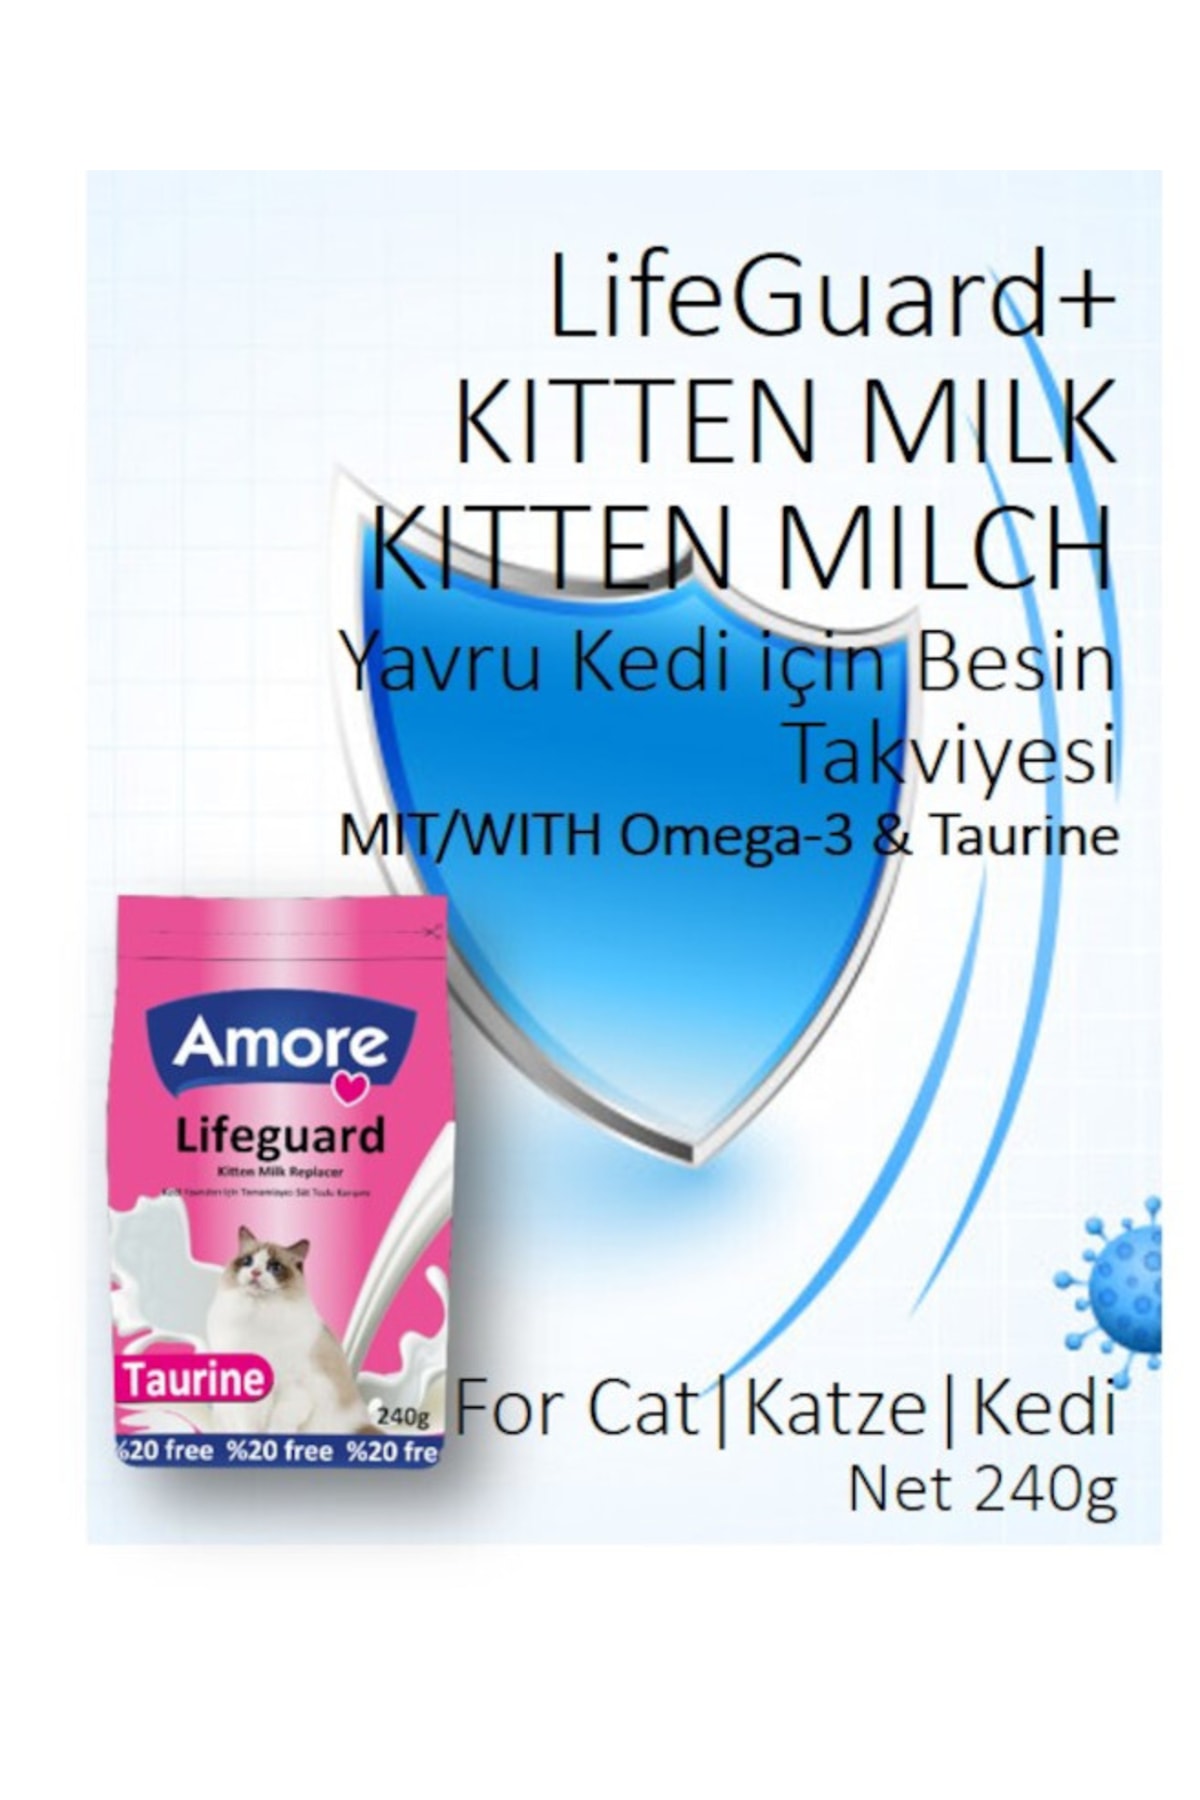 Amore Lifeguard Yavru Kedi Sut Tozu 12 Adet 240 G Kitten Milk Supplement Ve Biberon 1 Adet